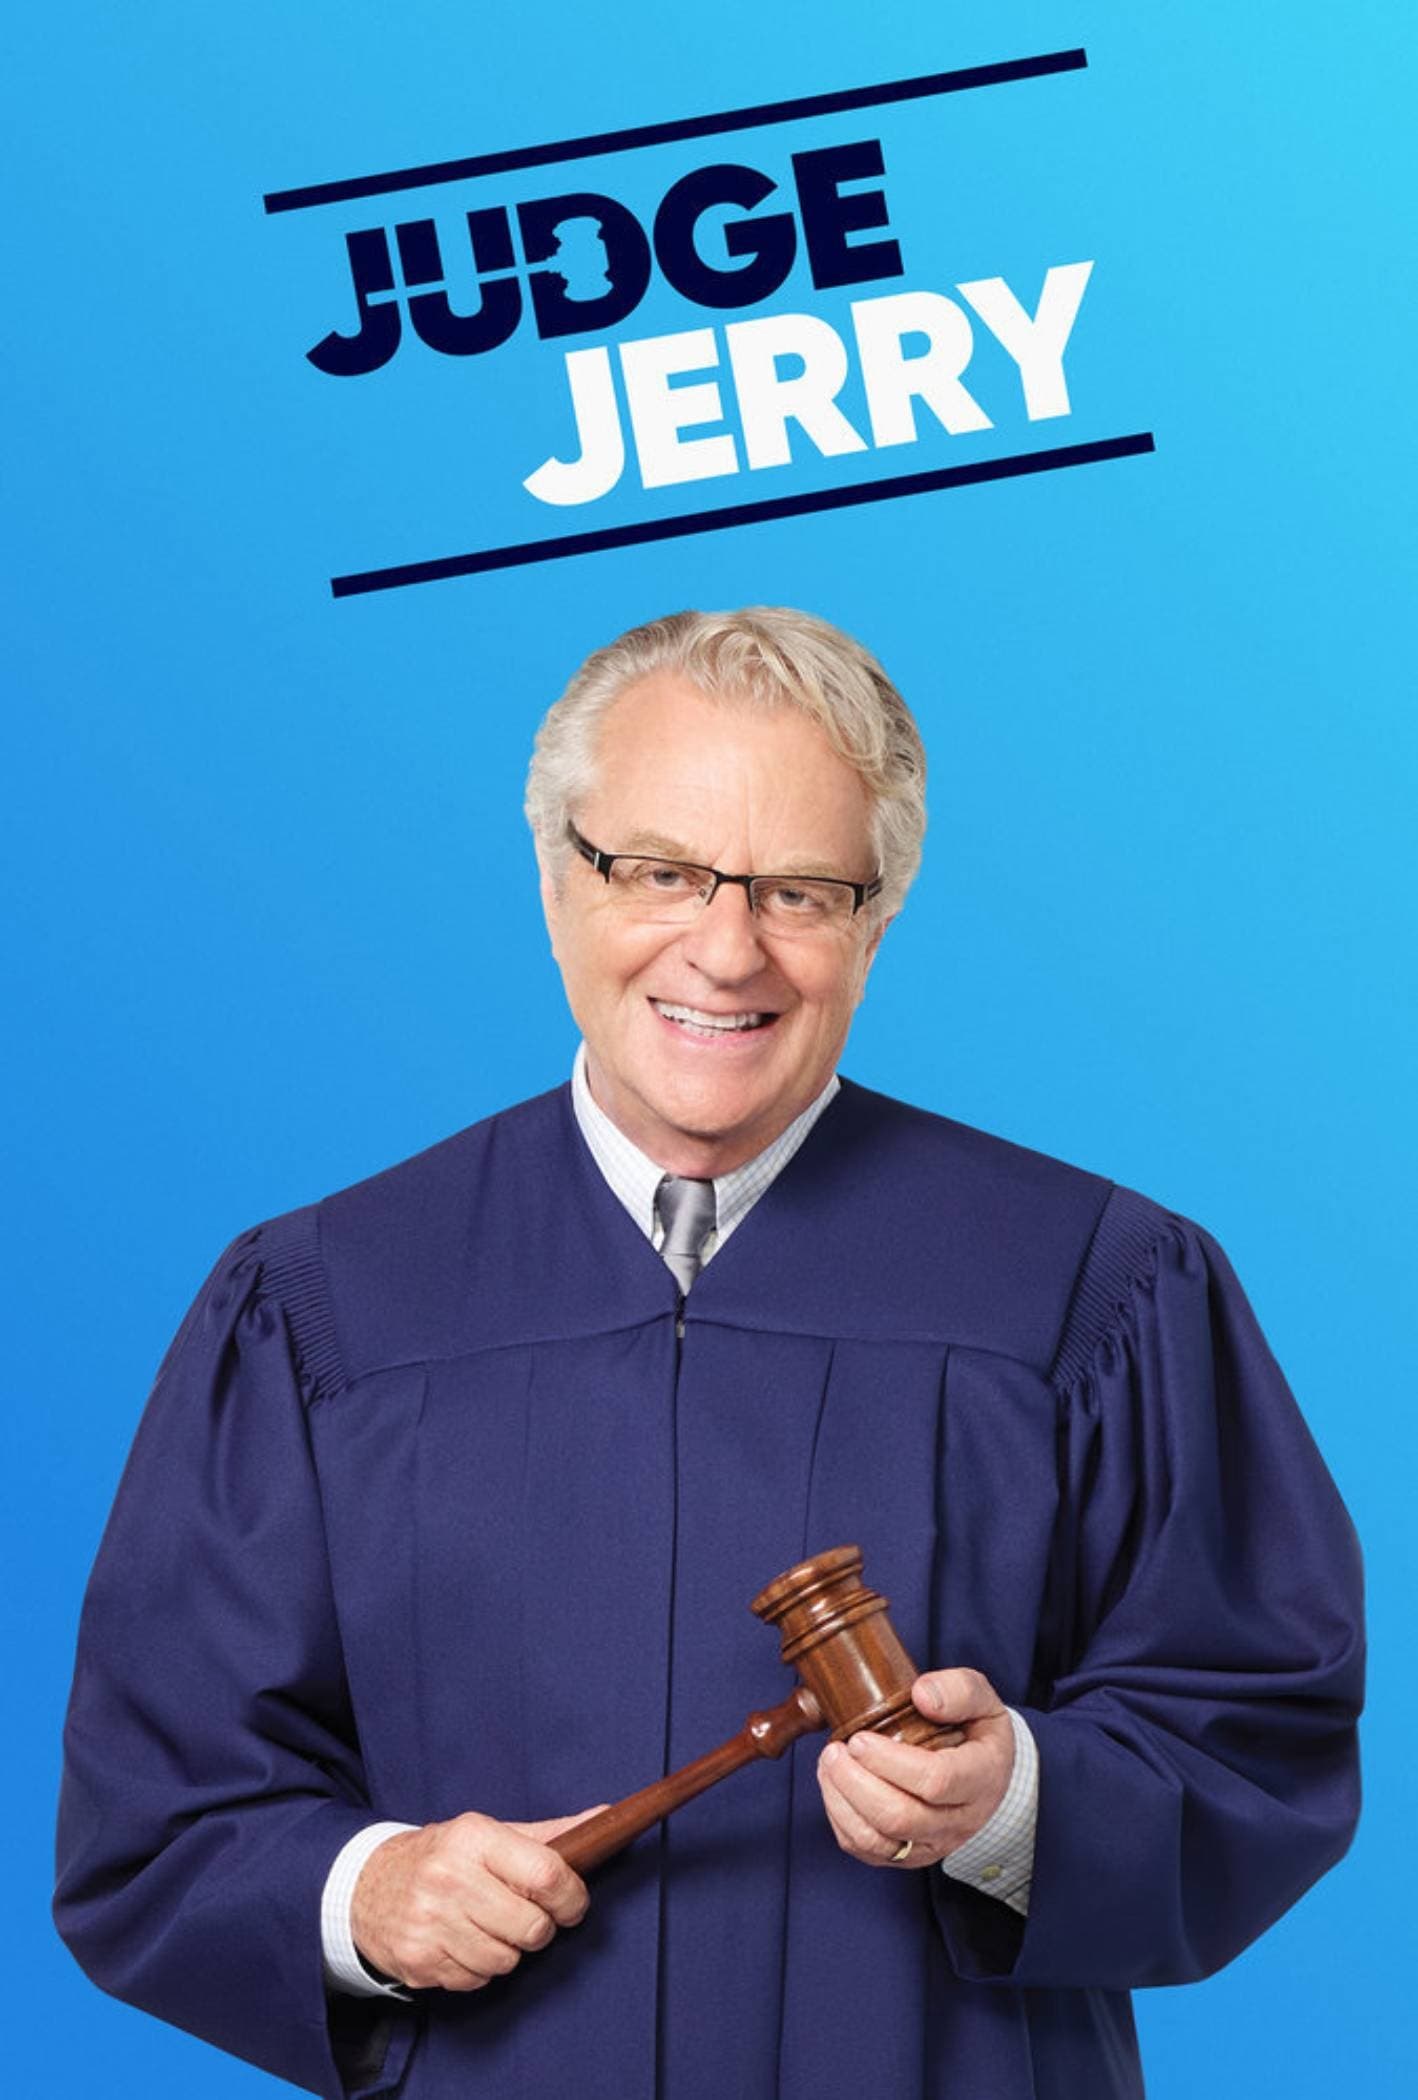 Judge Jerry (2019)